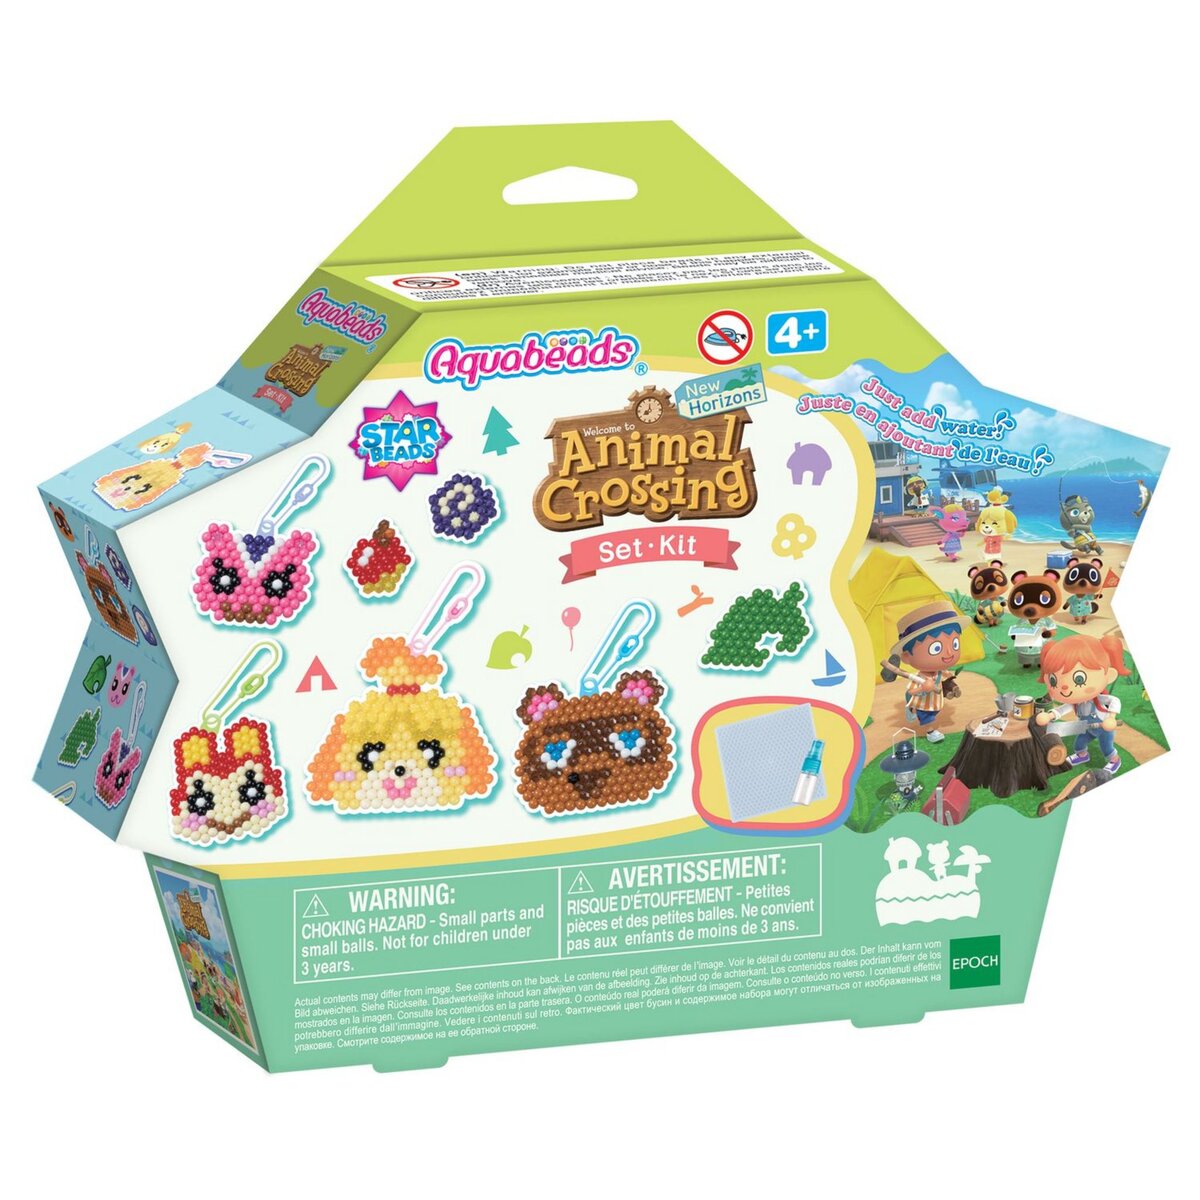 Aquabeads Kit Animal Crossing nouveaux horizons